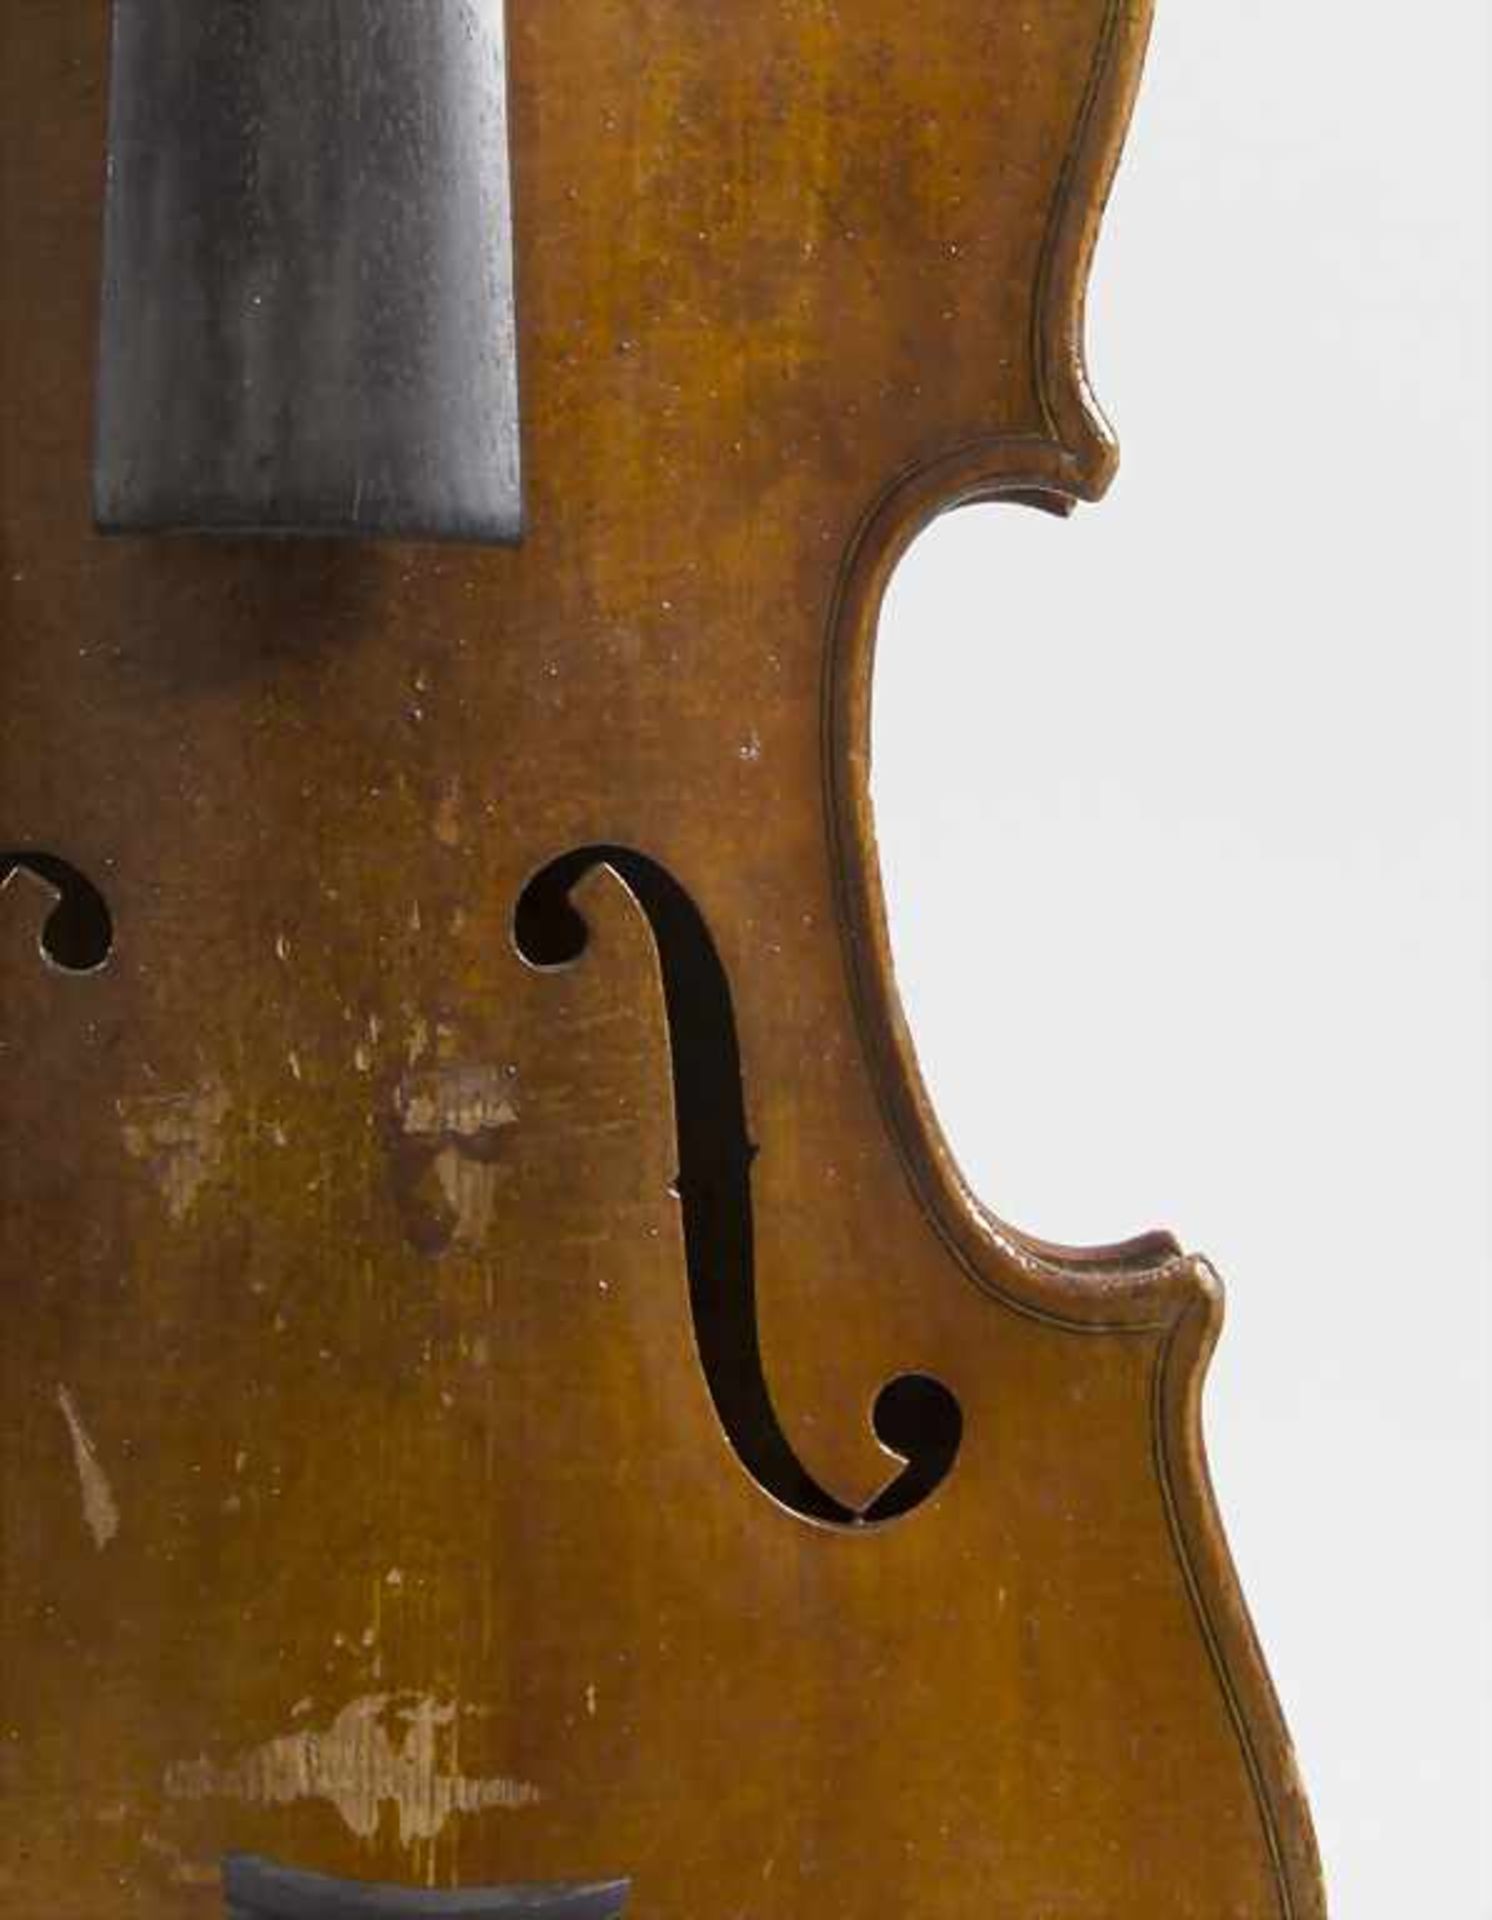 Violine / A violin, Modell 'Stradivari', Frankreich, um 1920 - Bild 4 aus 5